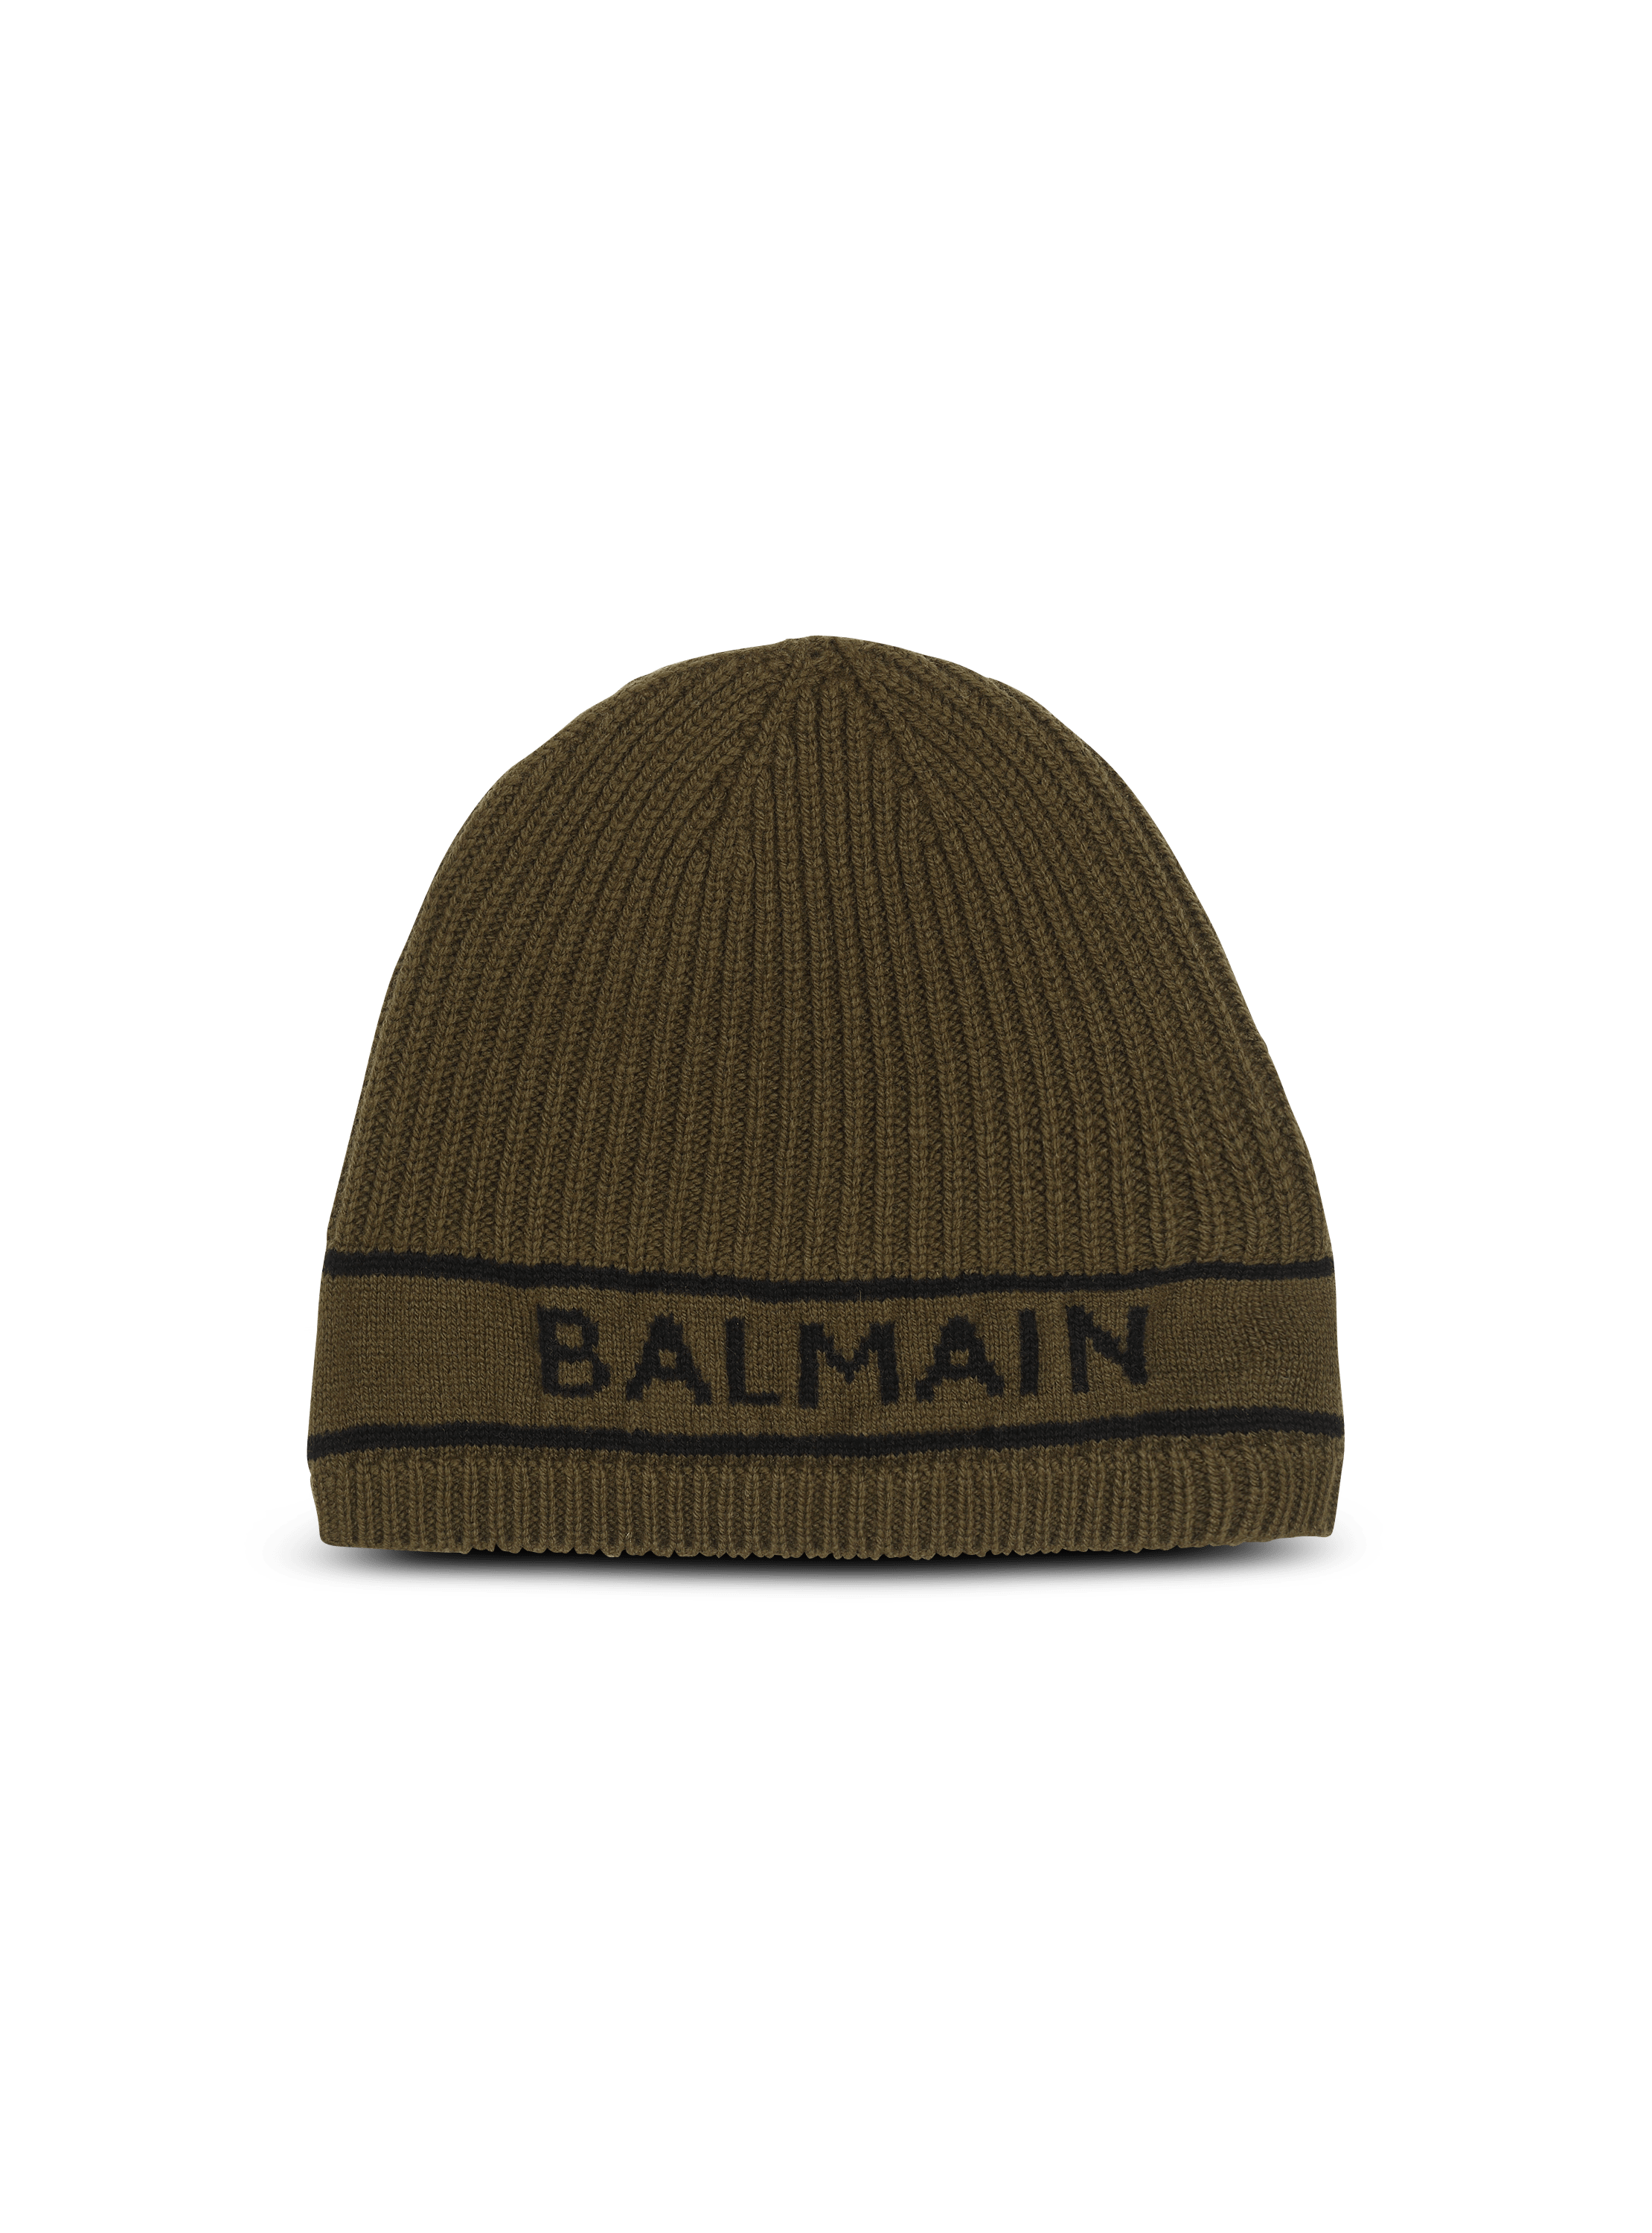 Balmain logo embroidered wool hat